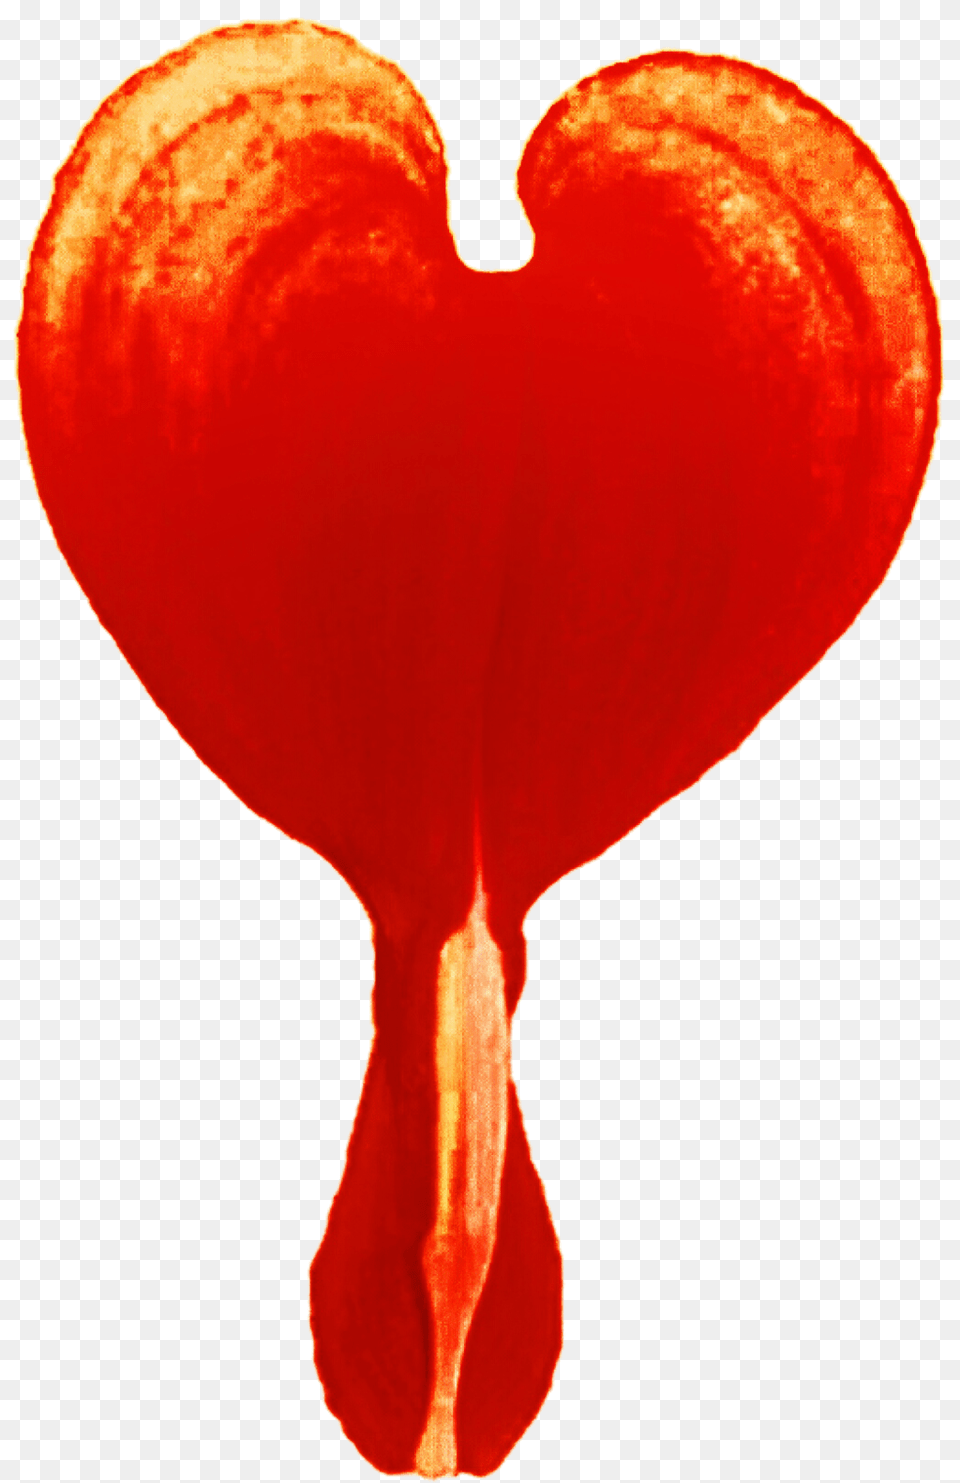 Orange Bleeding Heart, Food, Sweets, Candy, Ketchup Png Image